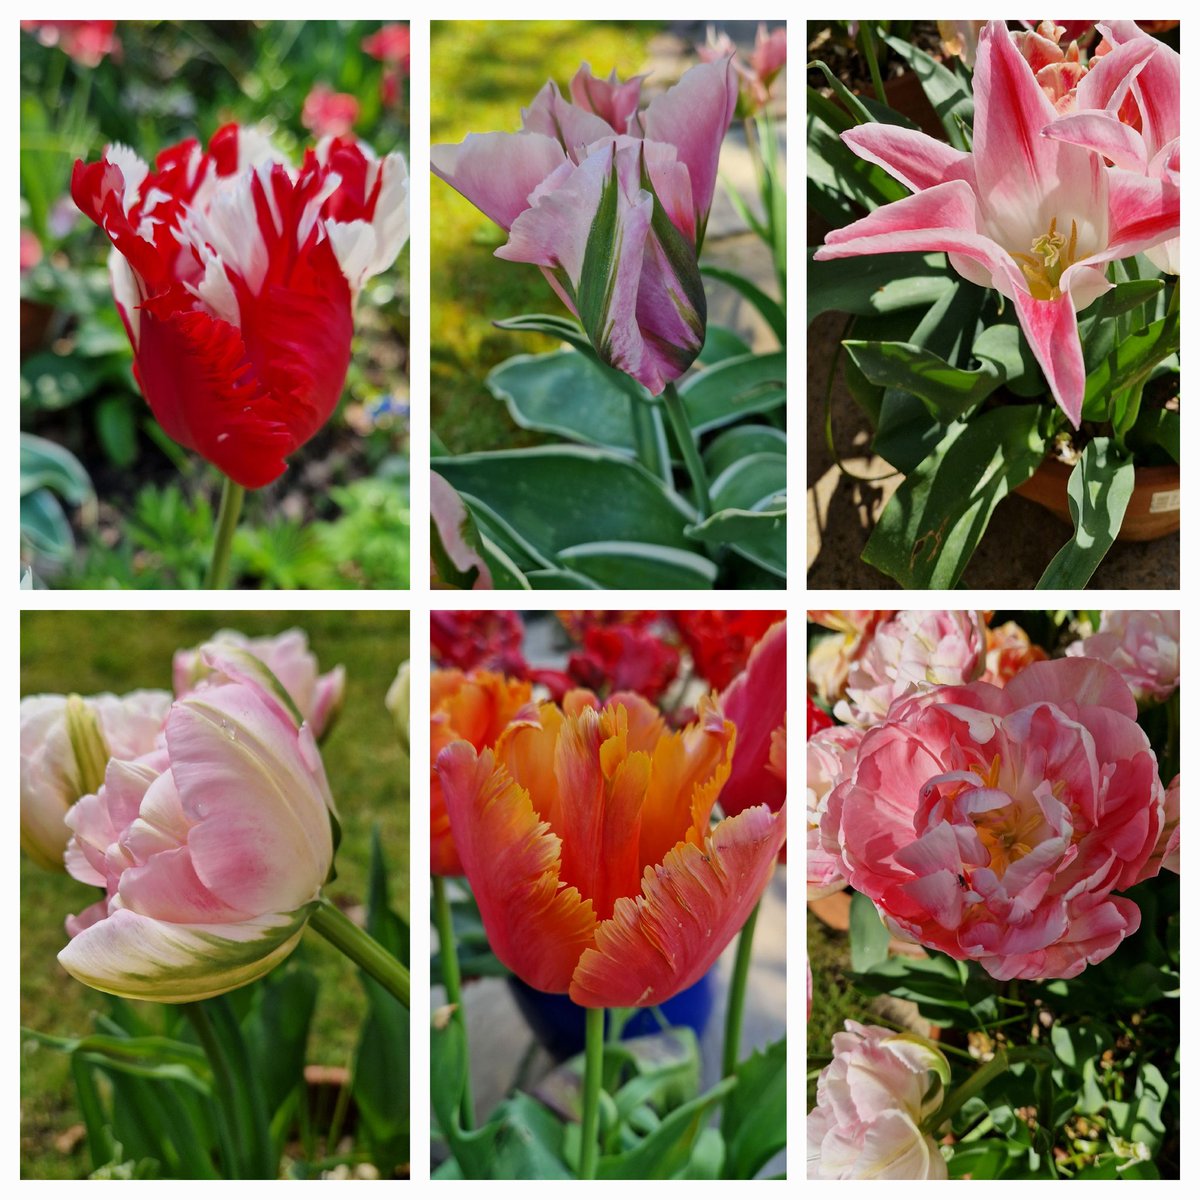 Tulips in my garden are thriving with the rain #tulip #sixonsaturday #garden